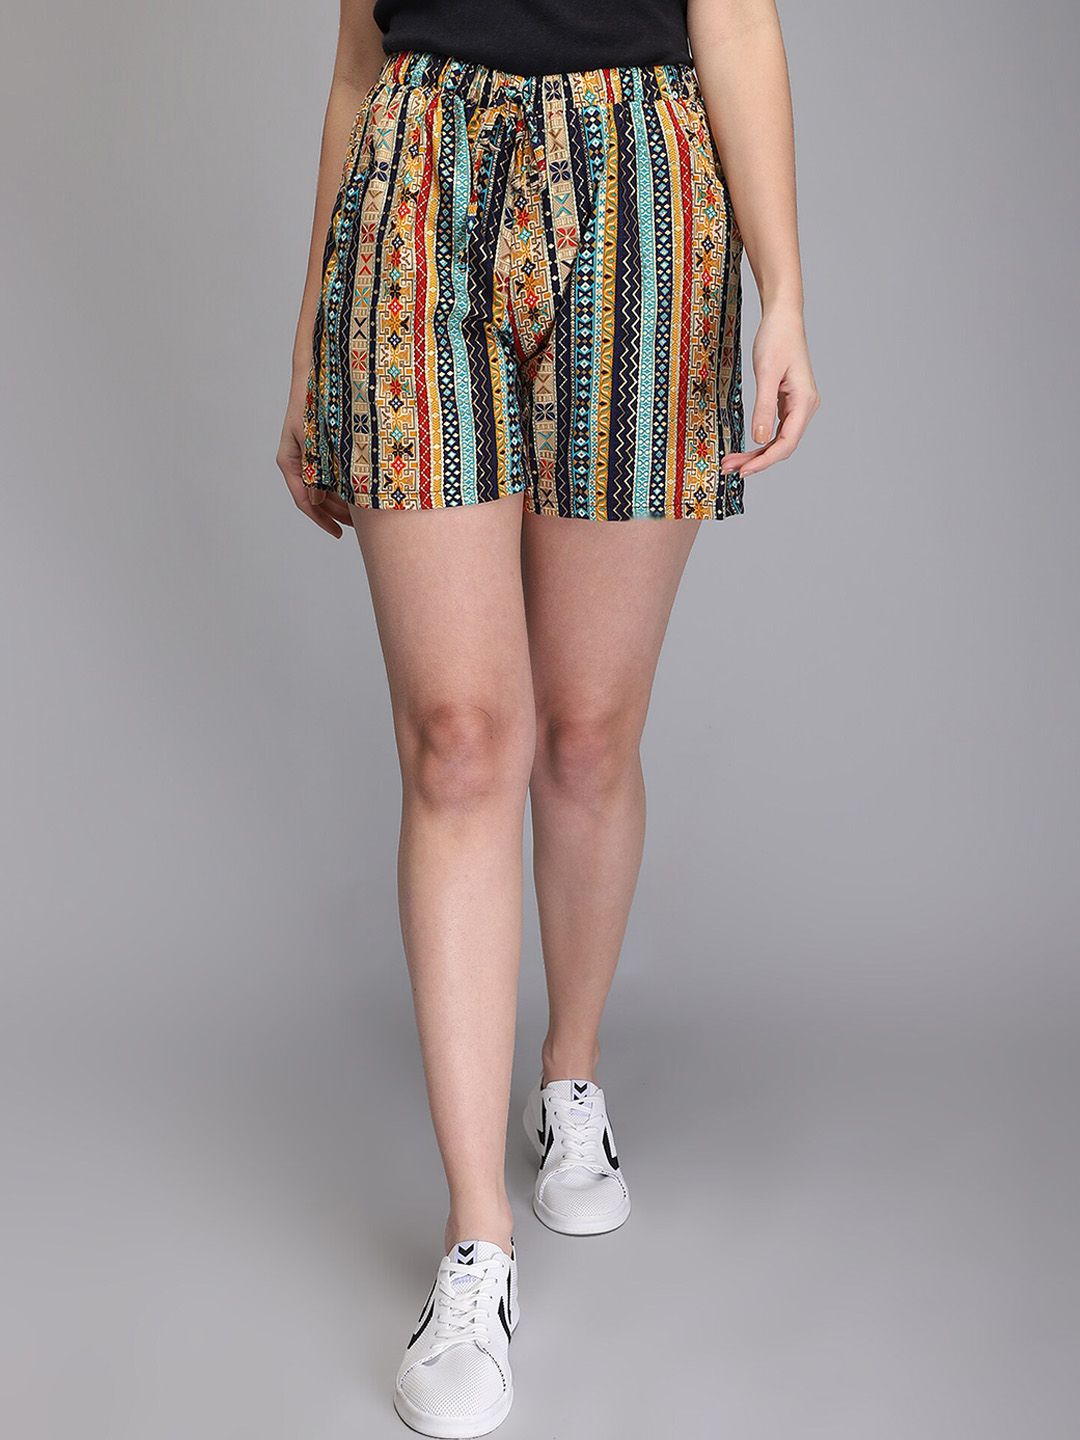 Aditi Wasan Women Beige Striped Printed Outdoor Shorts Price in India